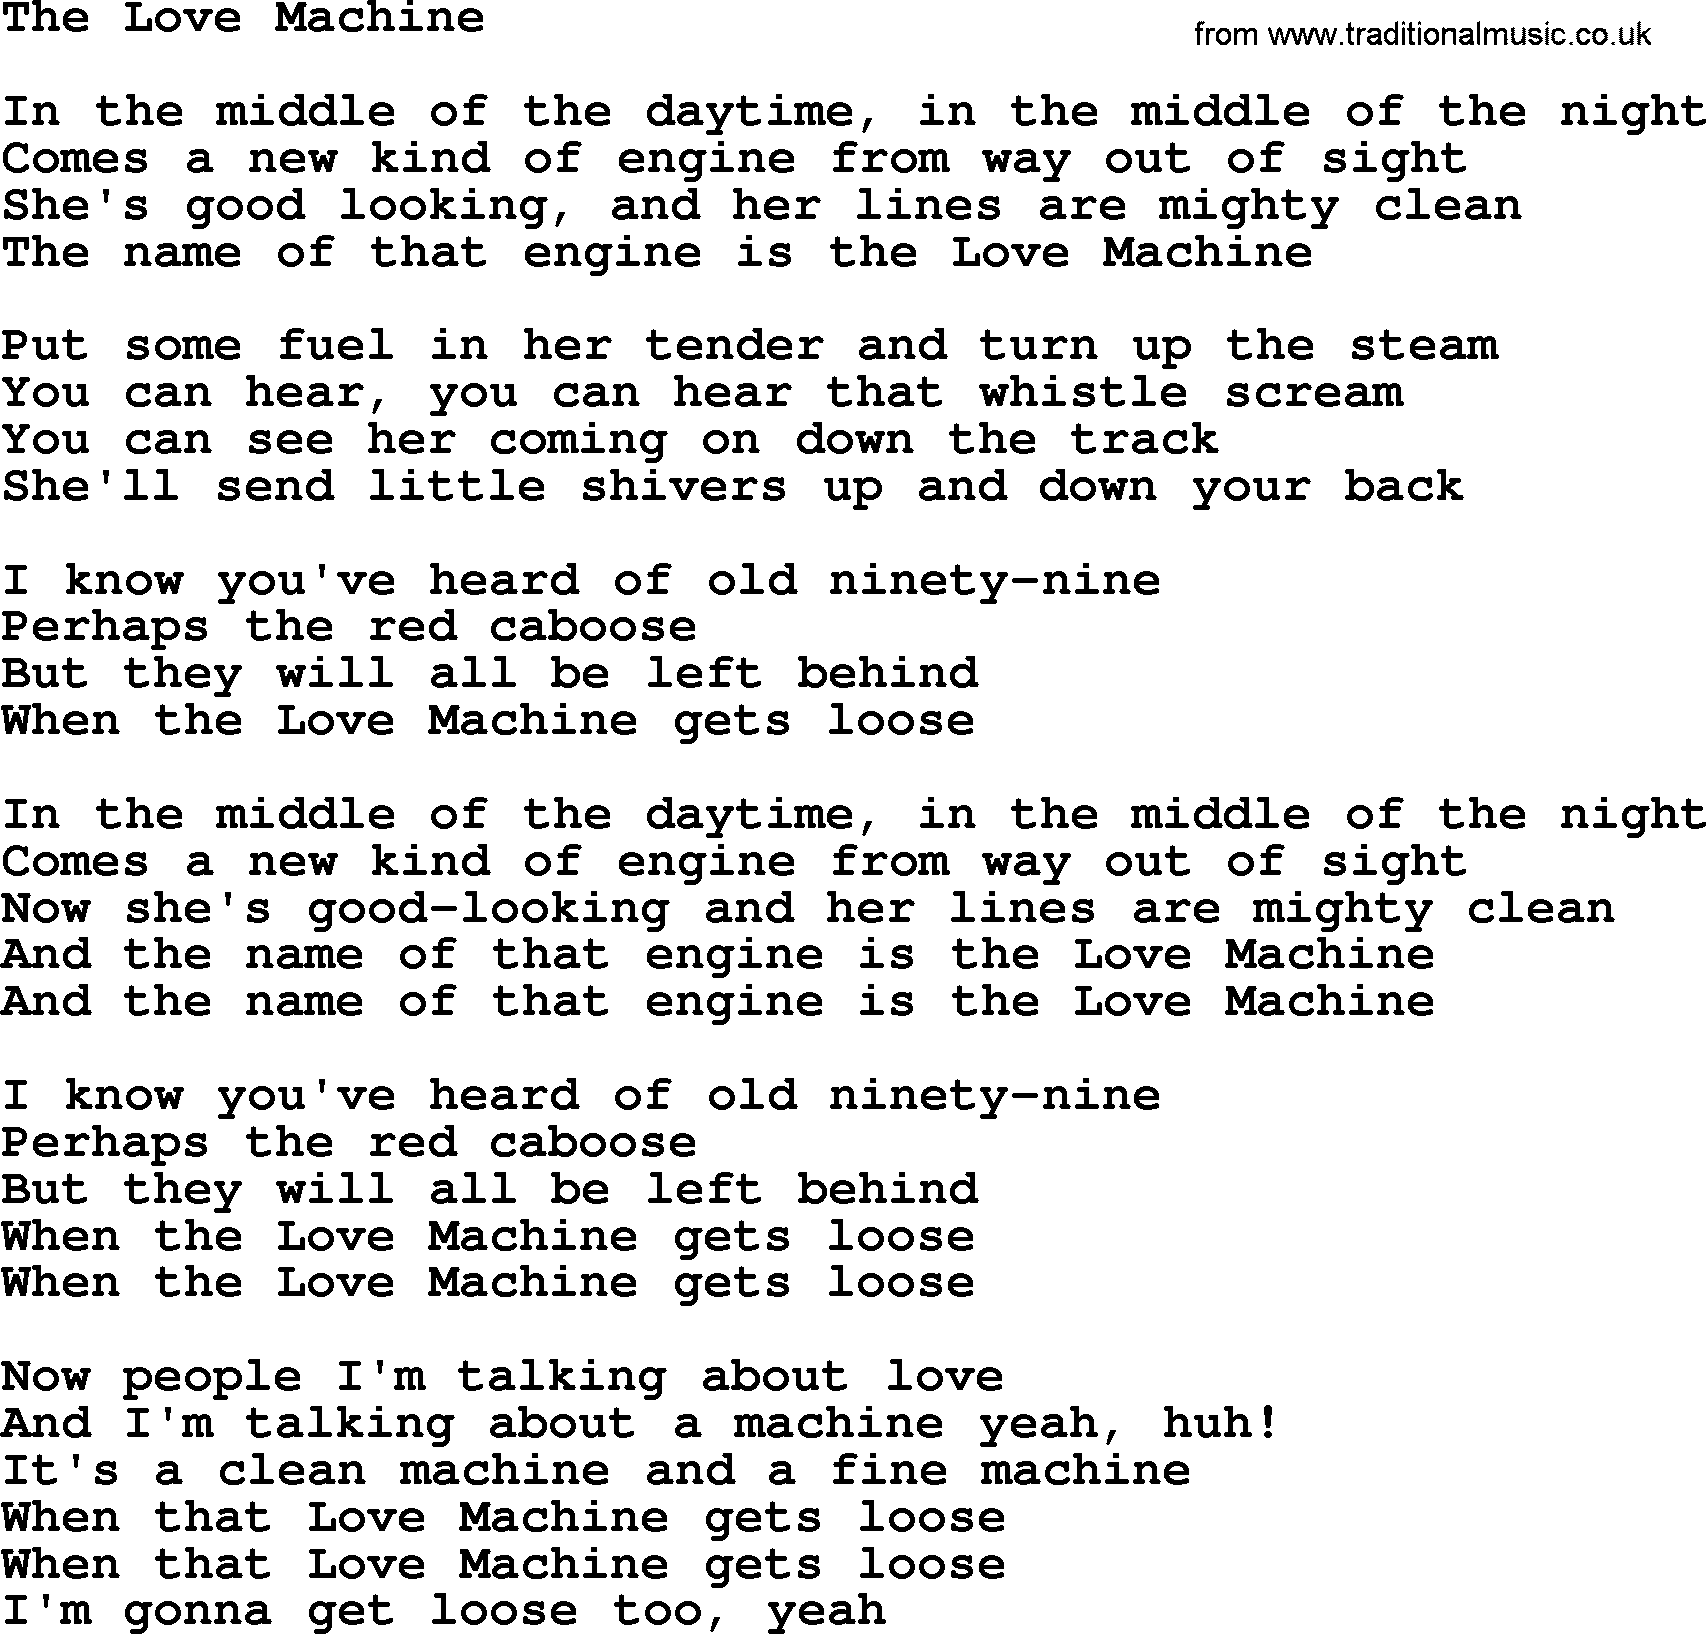 The Byrds song The Love Machine, lyrics